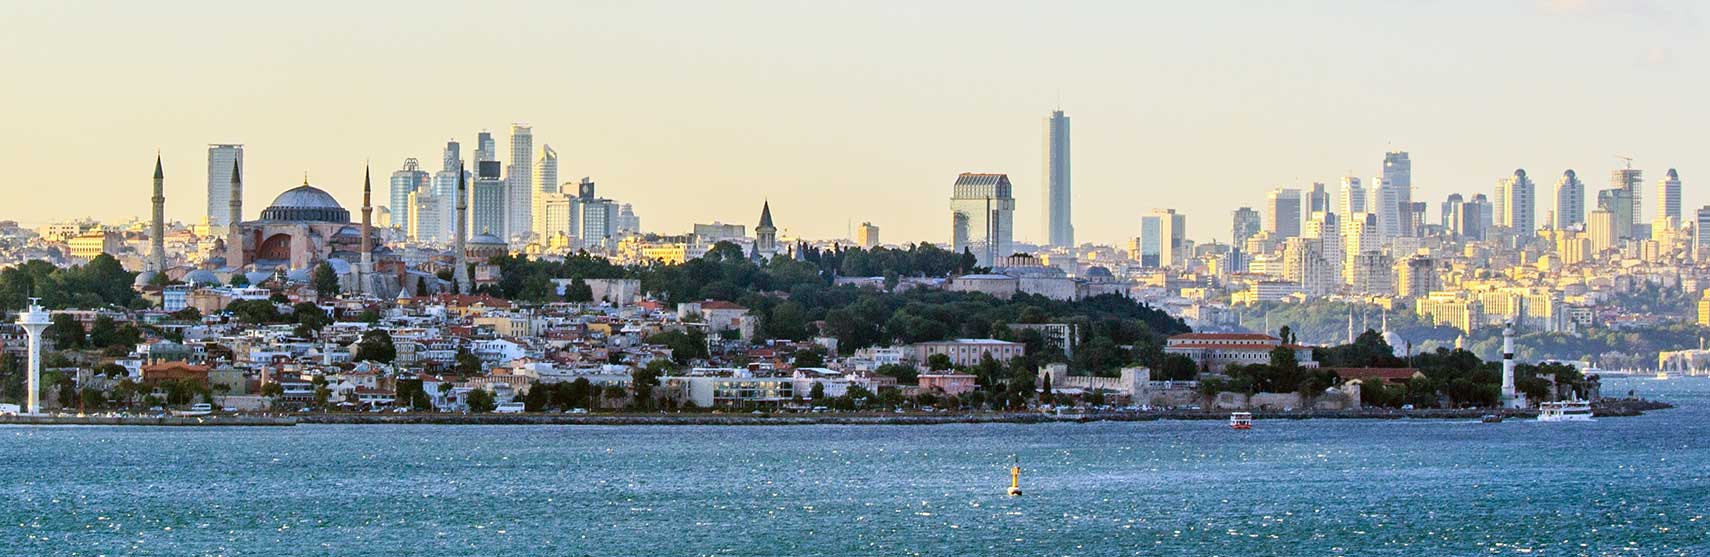 Panorama of the skyline of Istanbul, Turkey